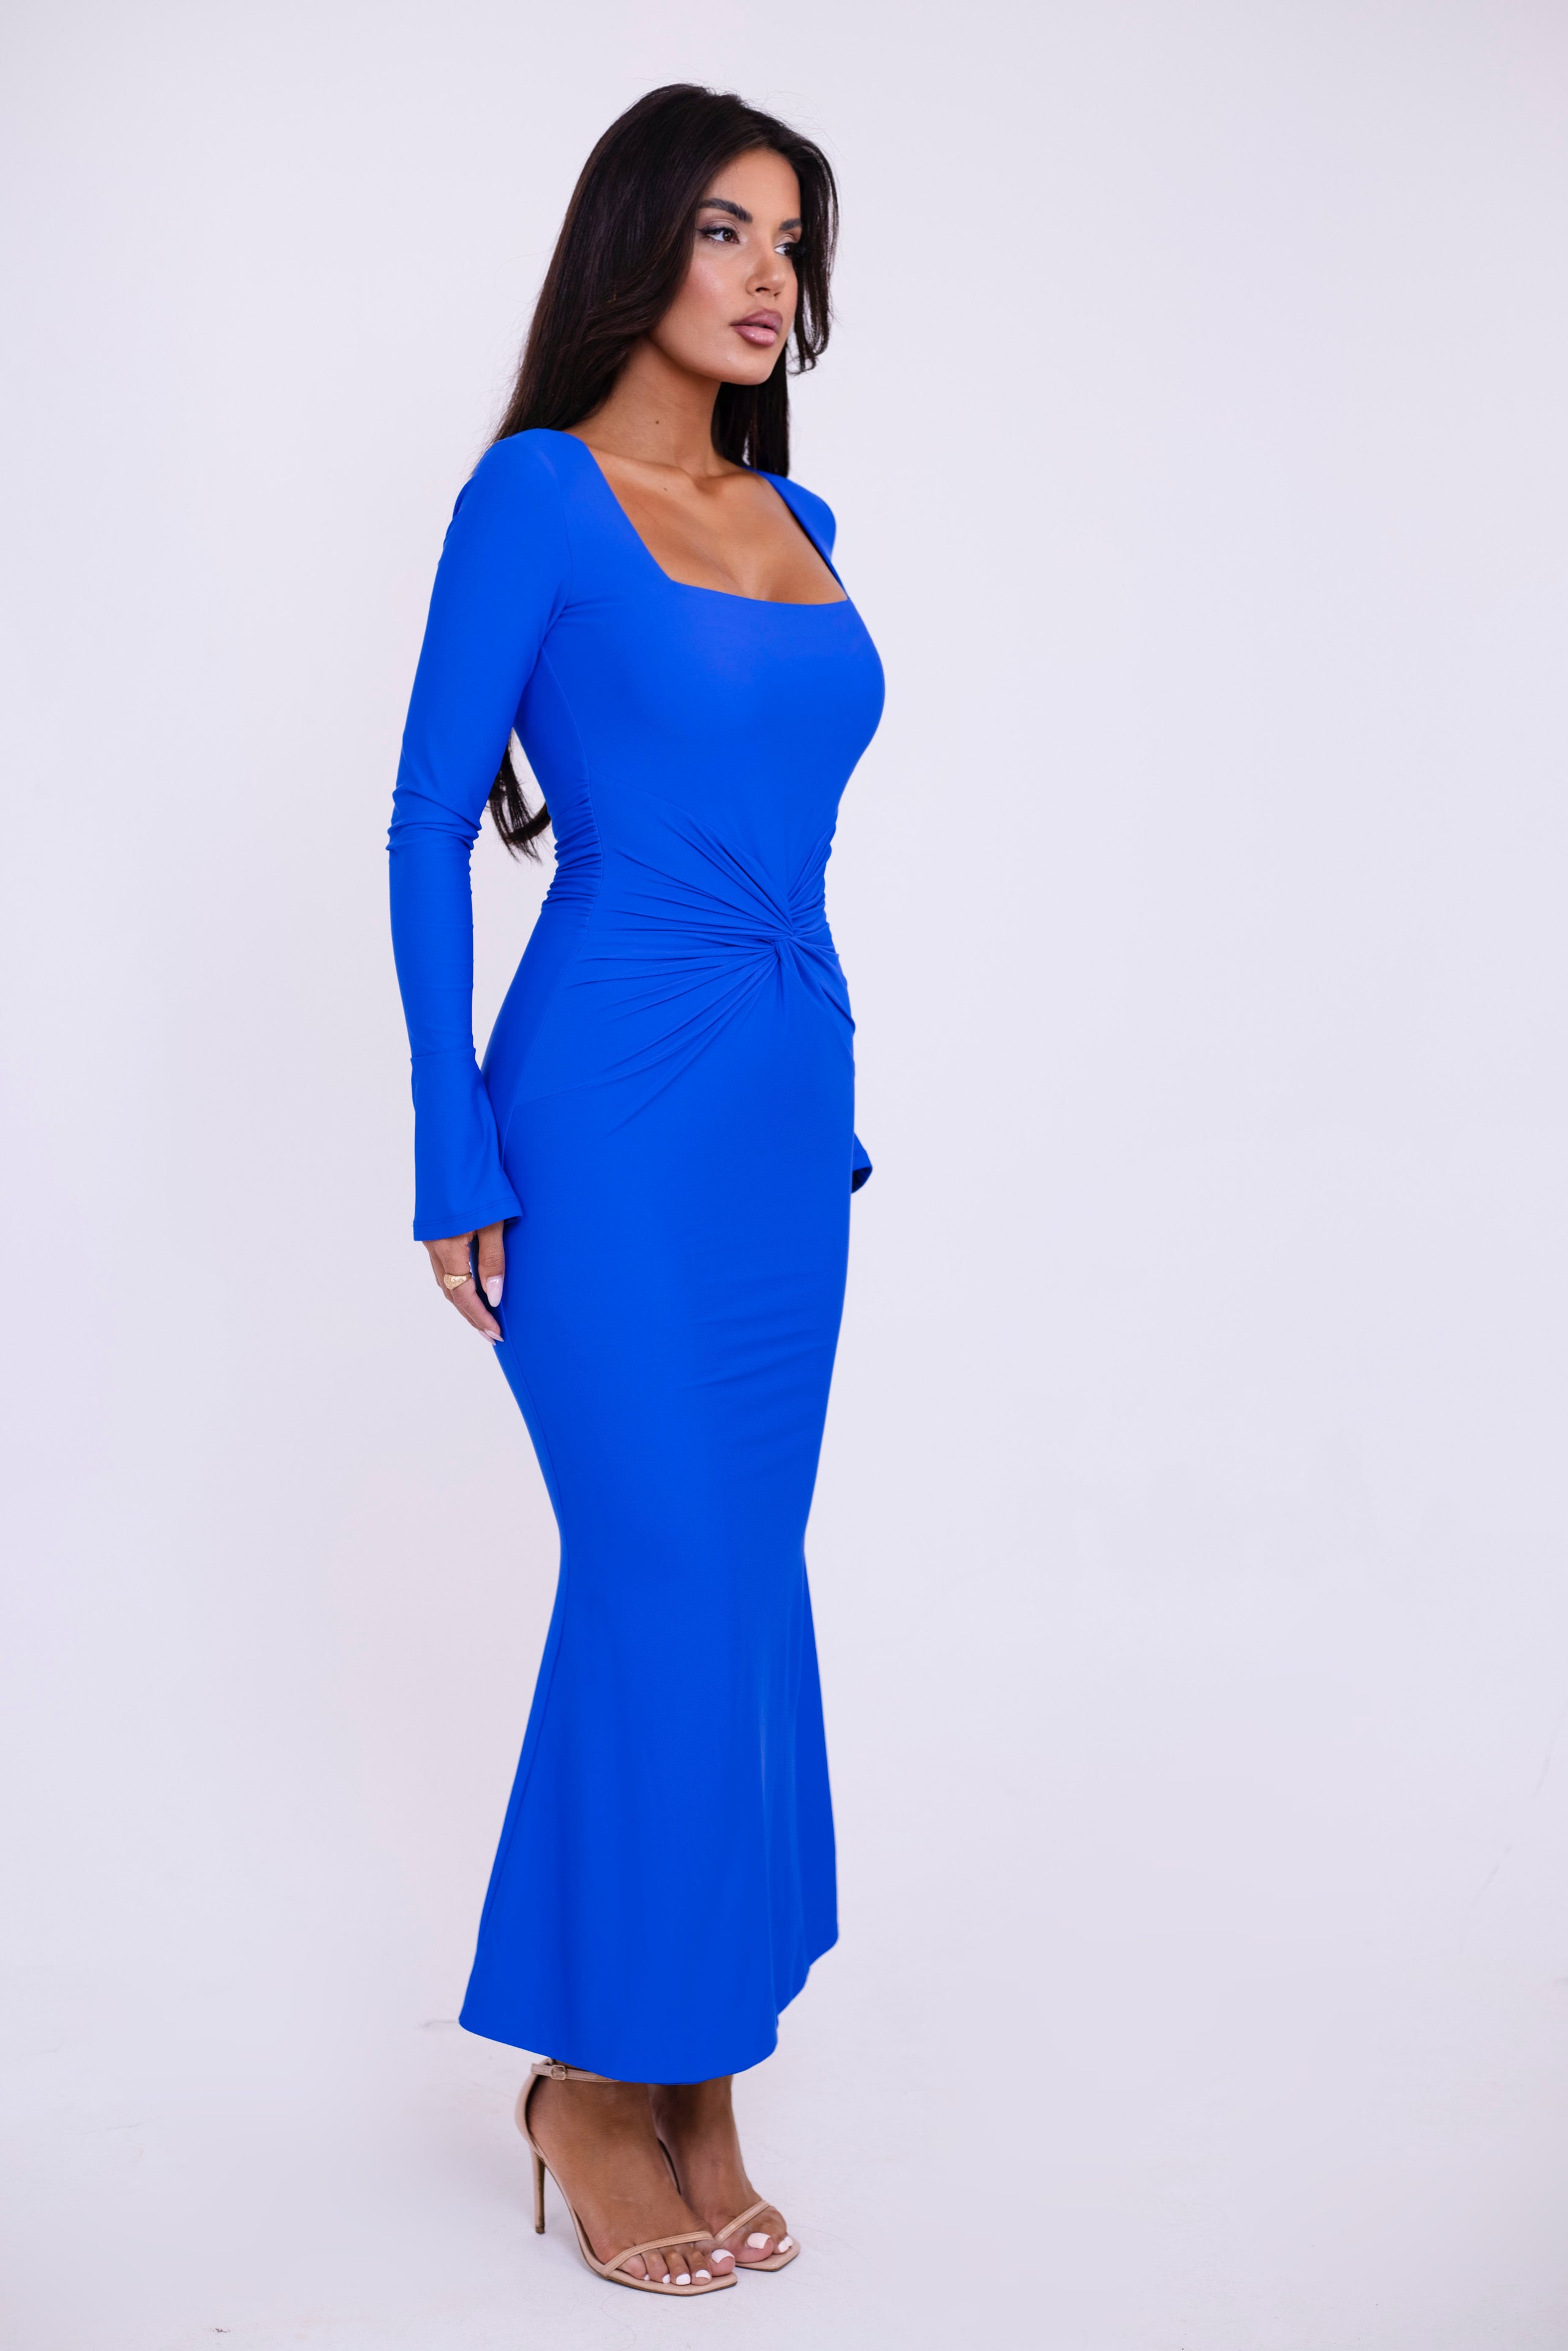 Sereia Royal Blue Dress